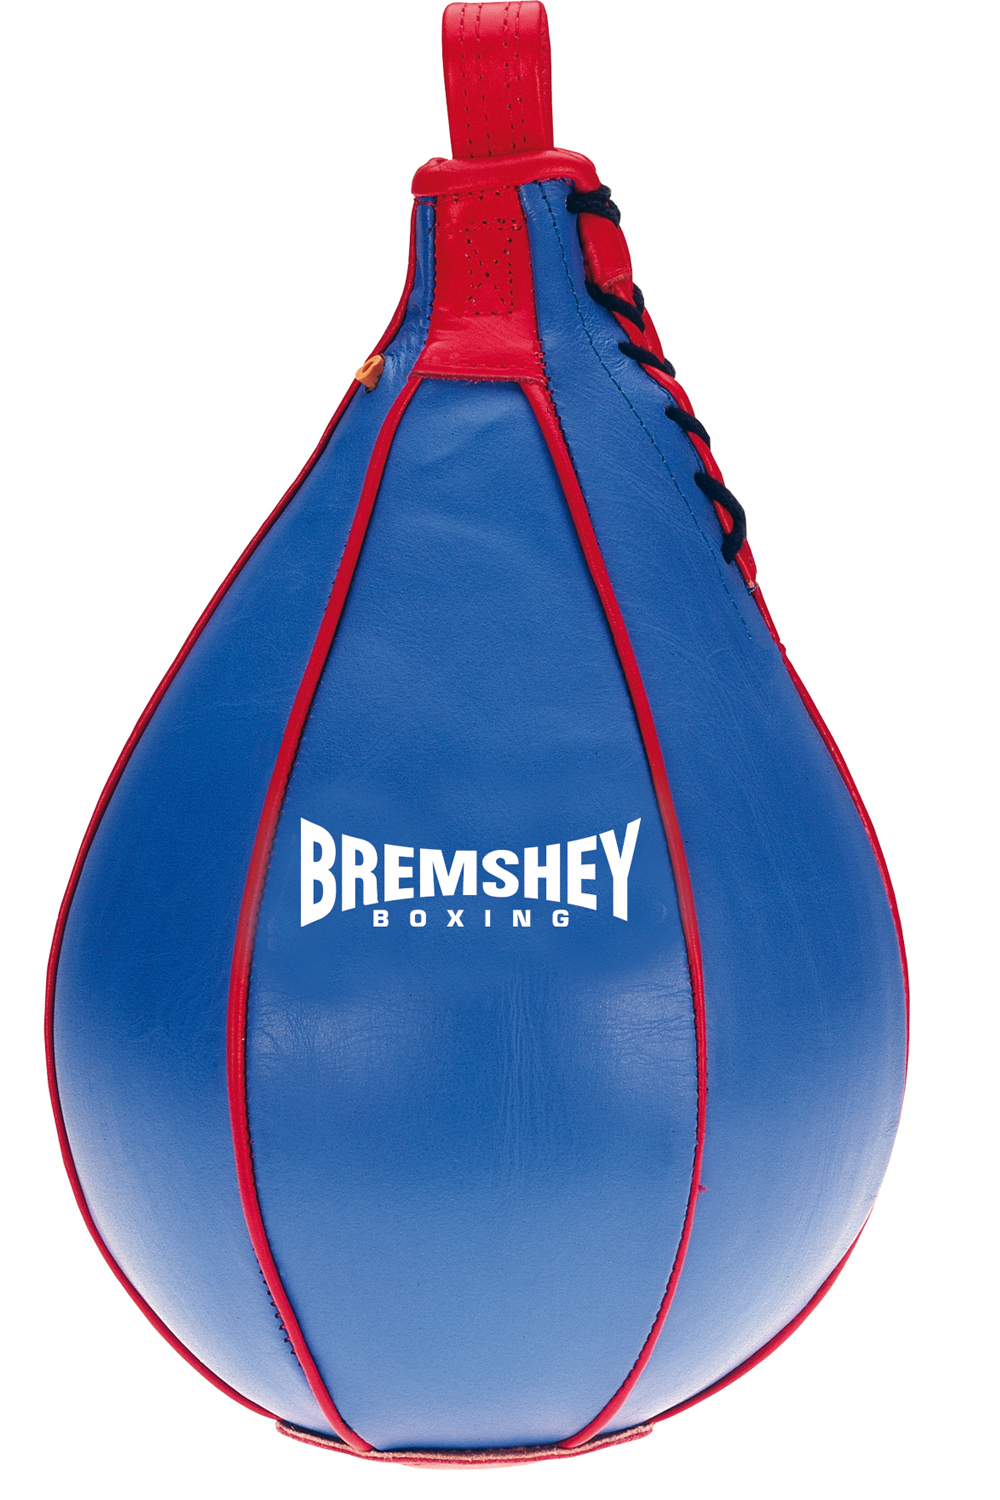 Bremshey Speedball (Boksbal)